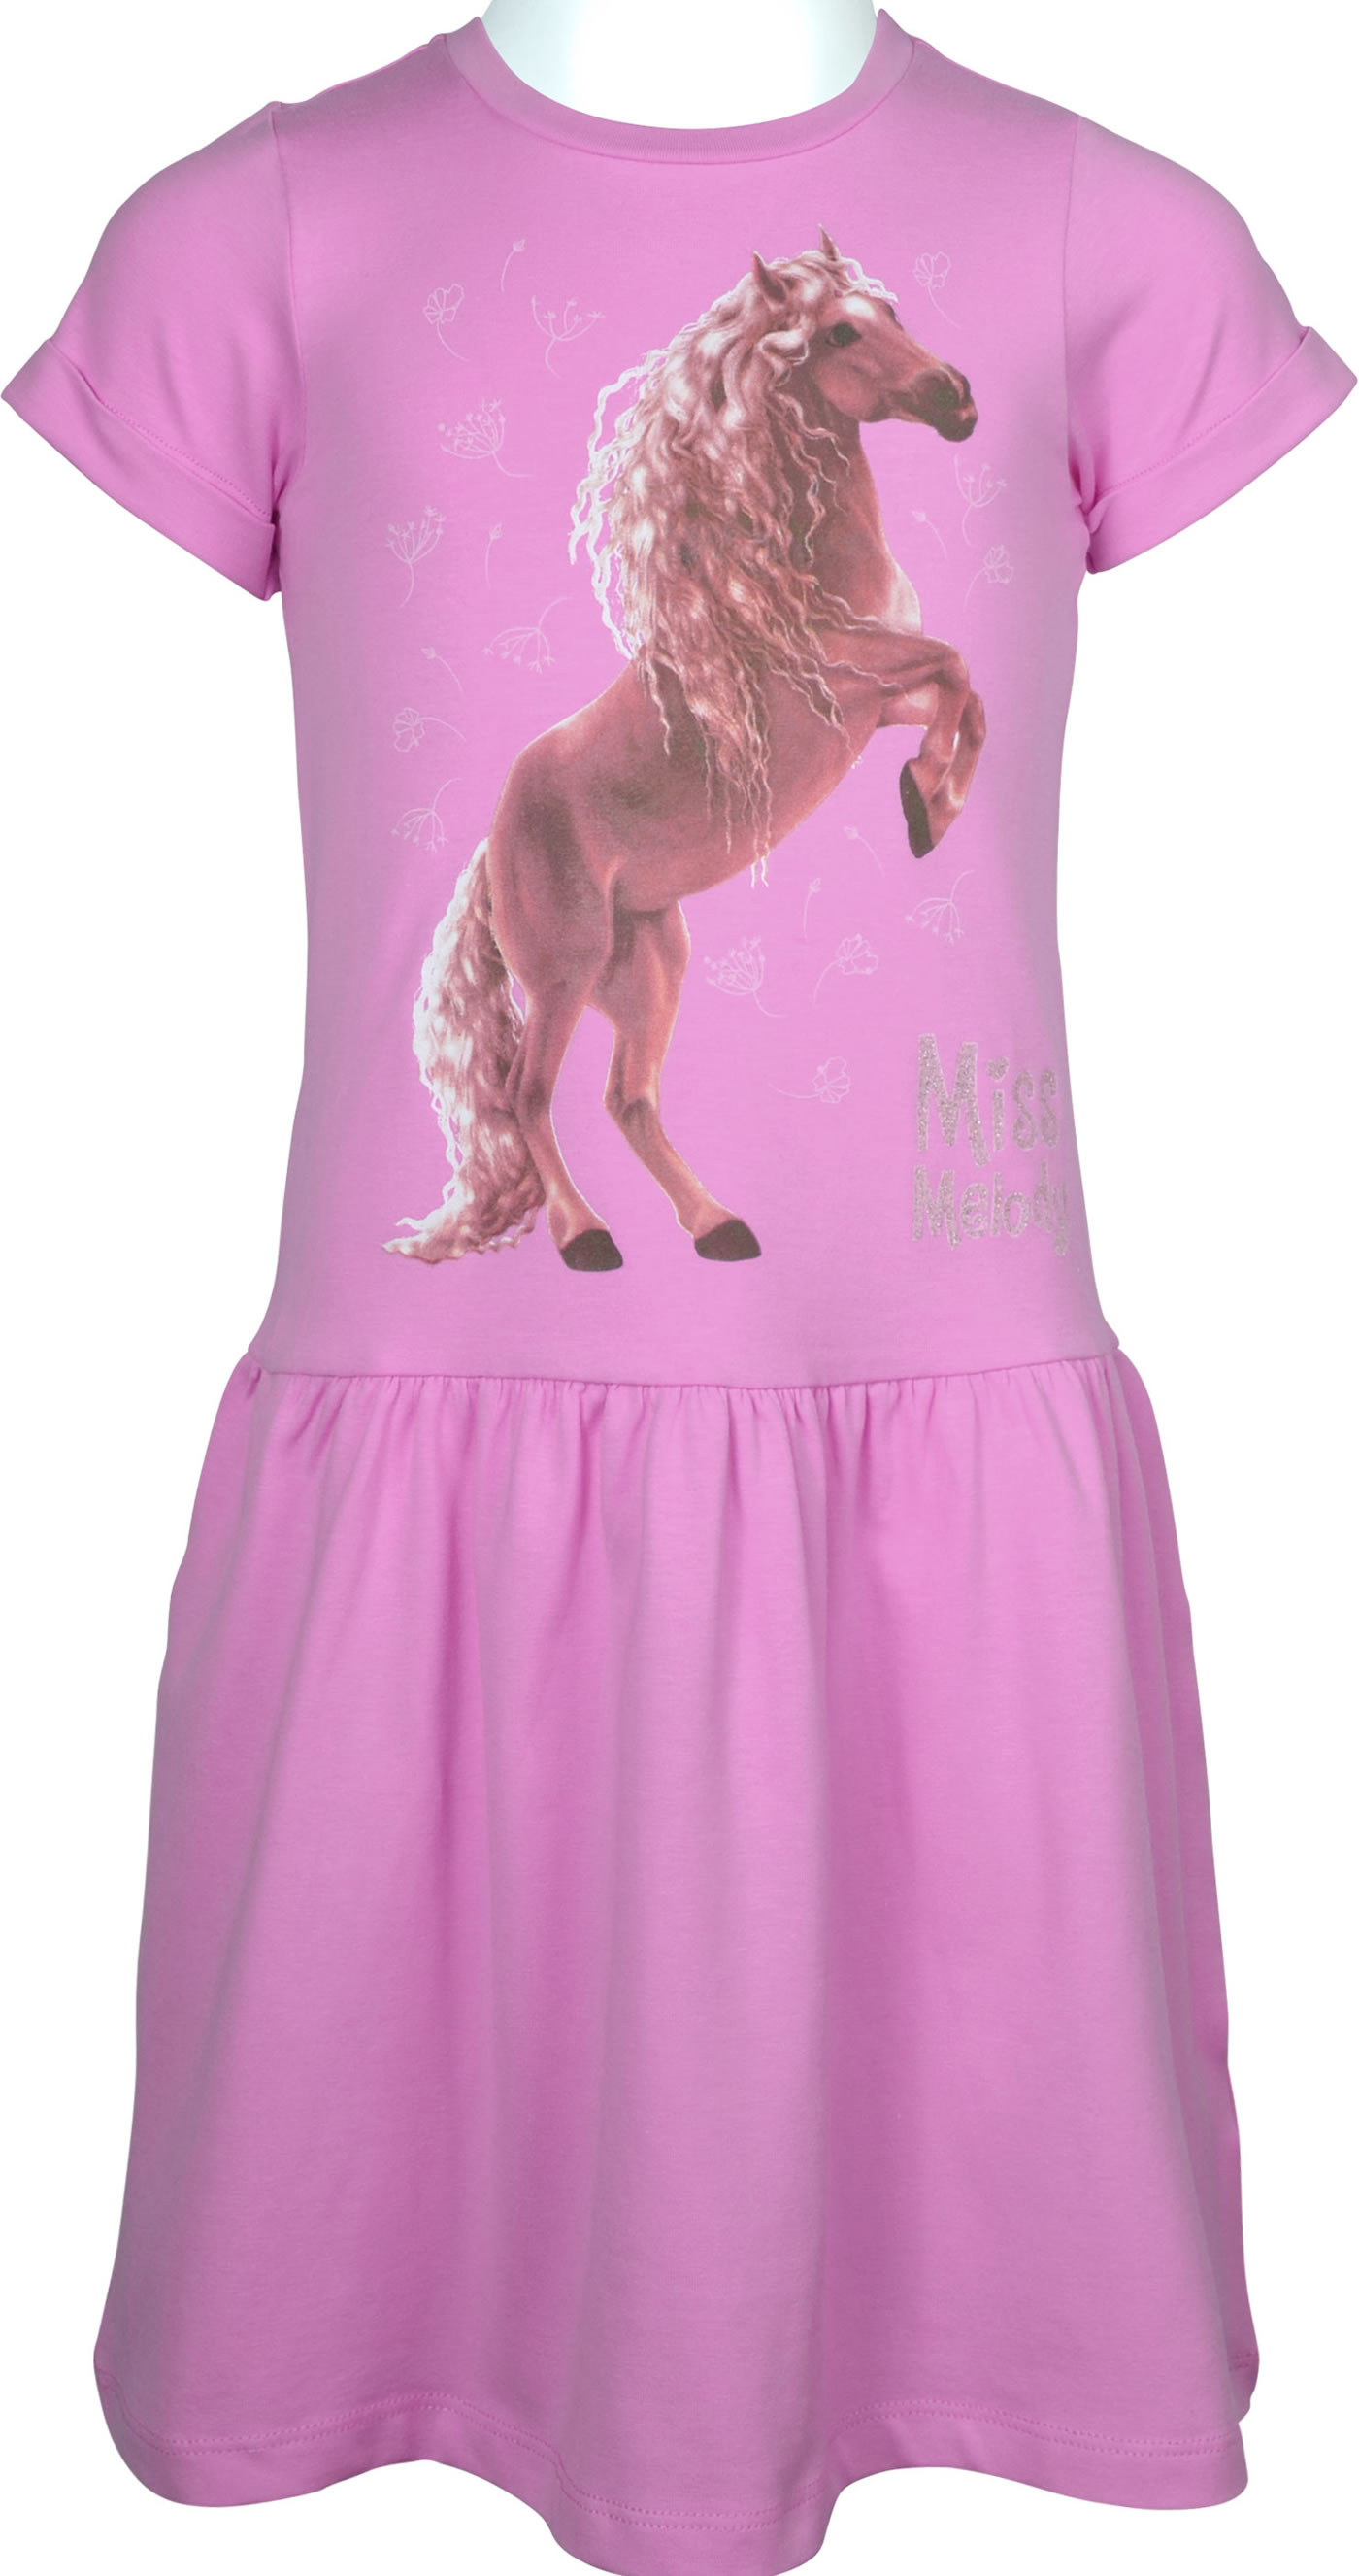 Miss Melody Dress short sleeve sachet pink shop online at